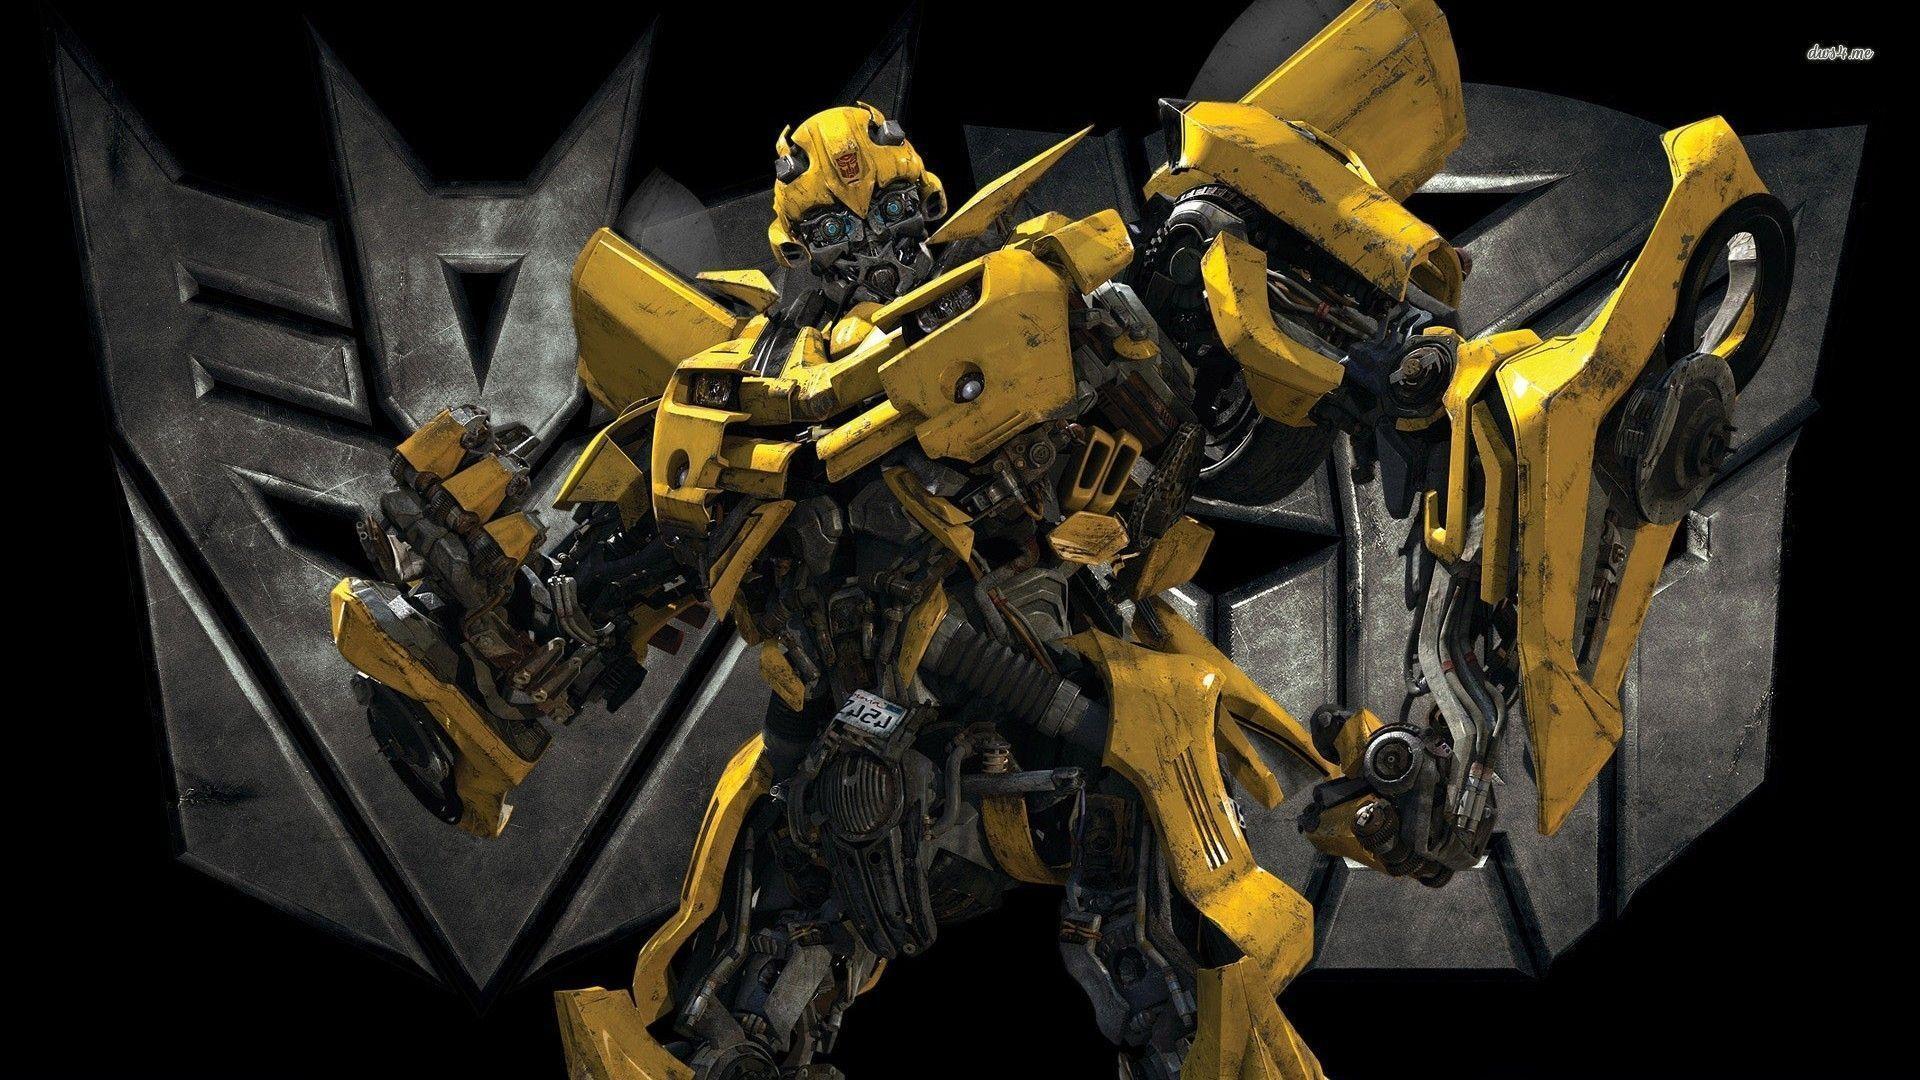 Transformers Wallpaper Bumblebee